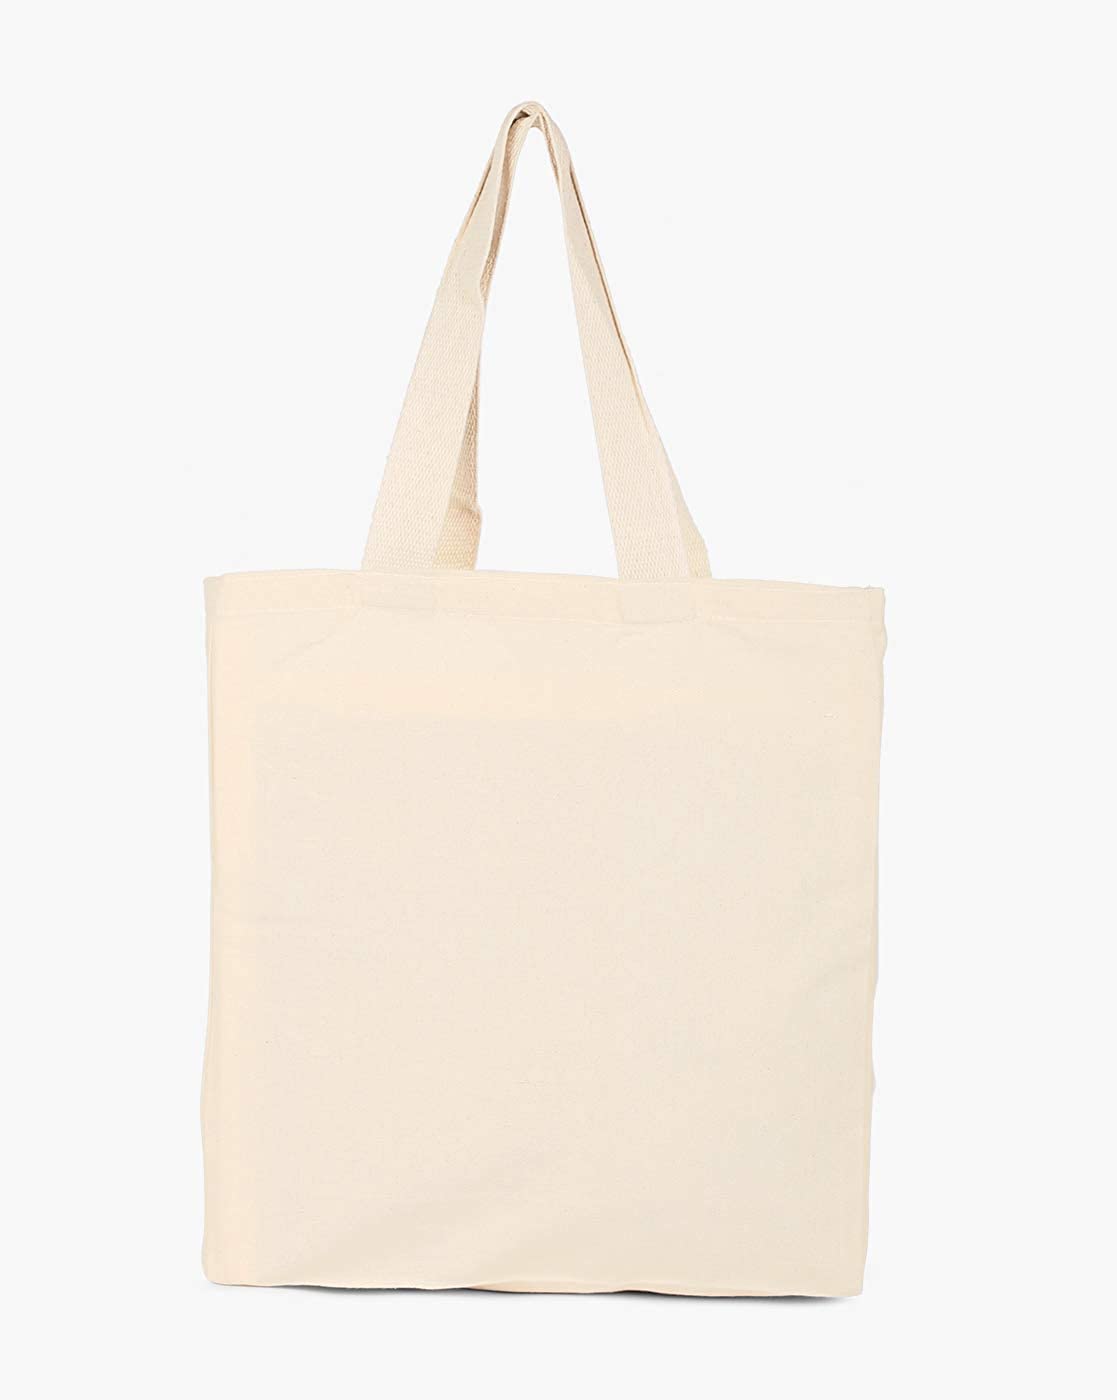 Kids Mandi off-white canvas travel bag with 15 liter capacity.